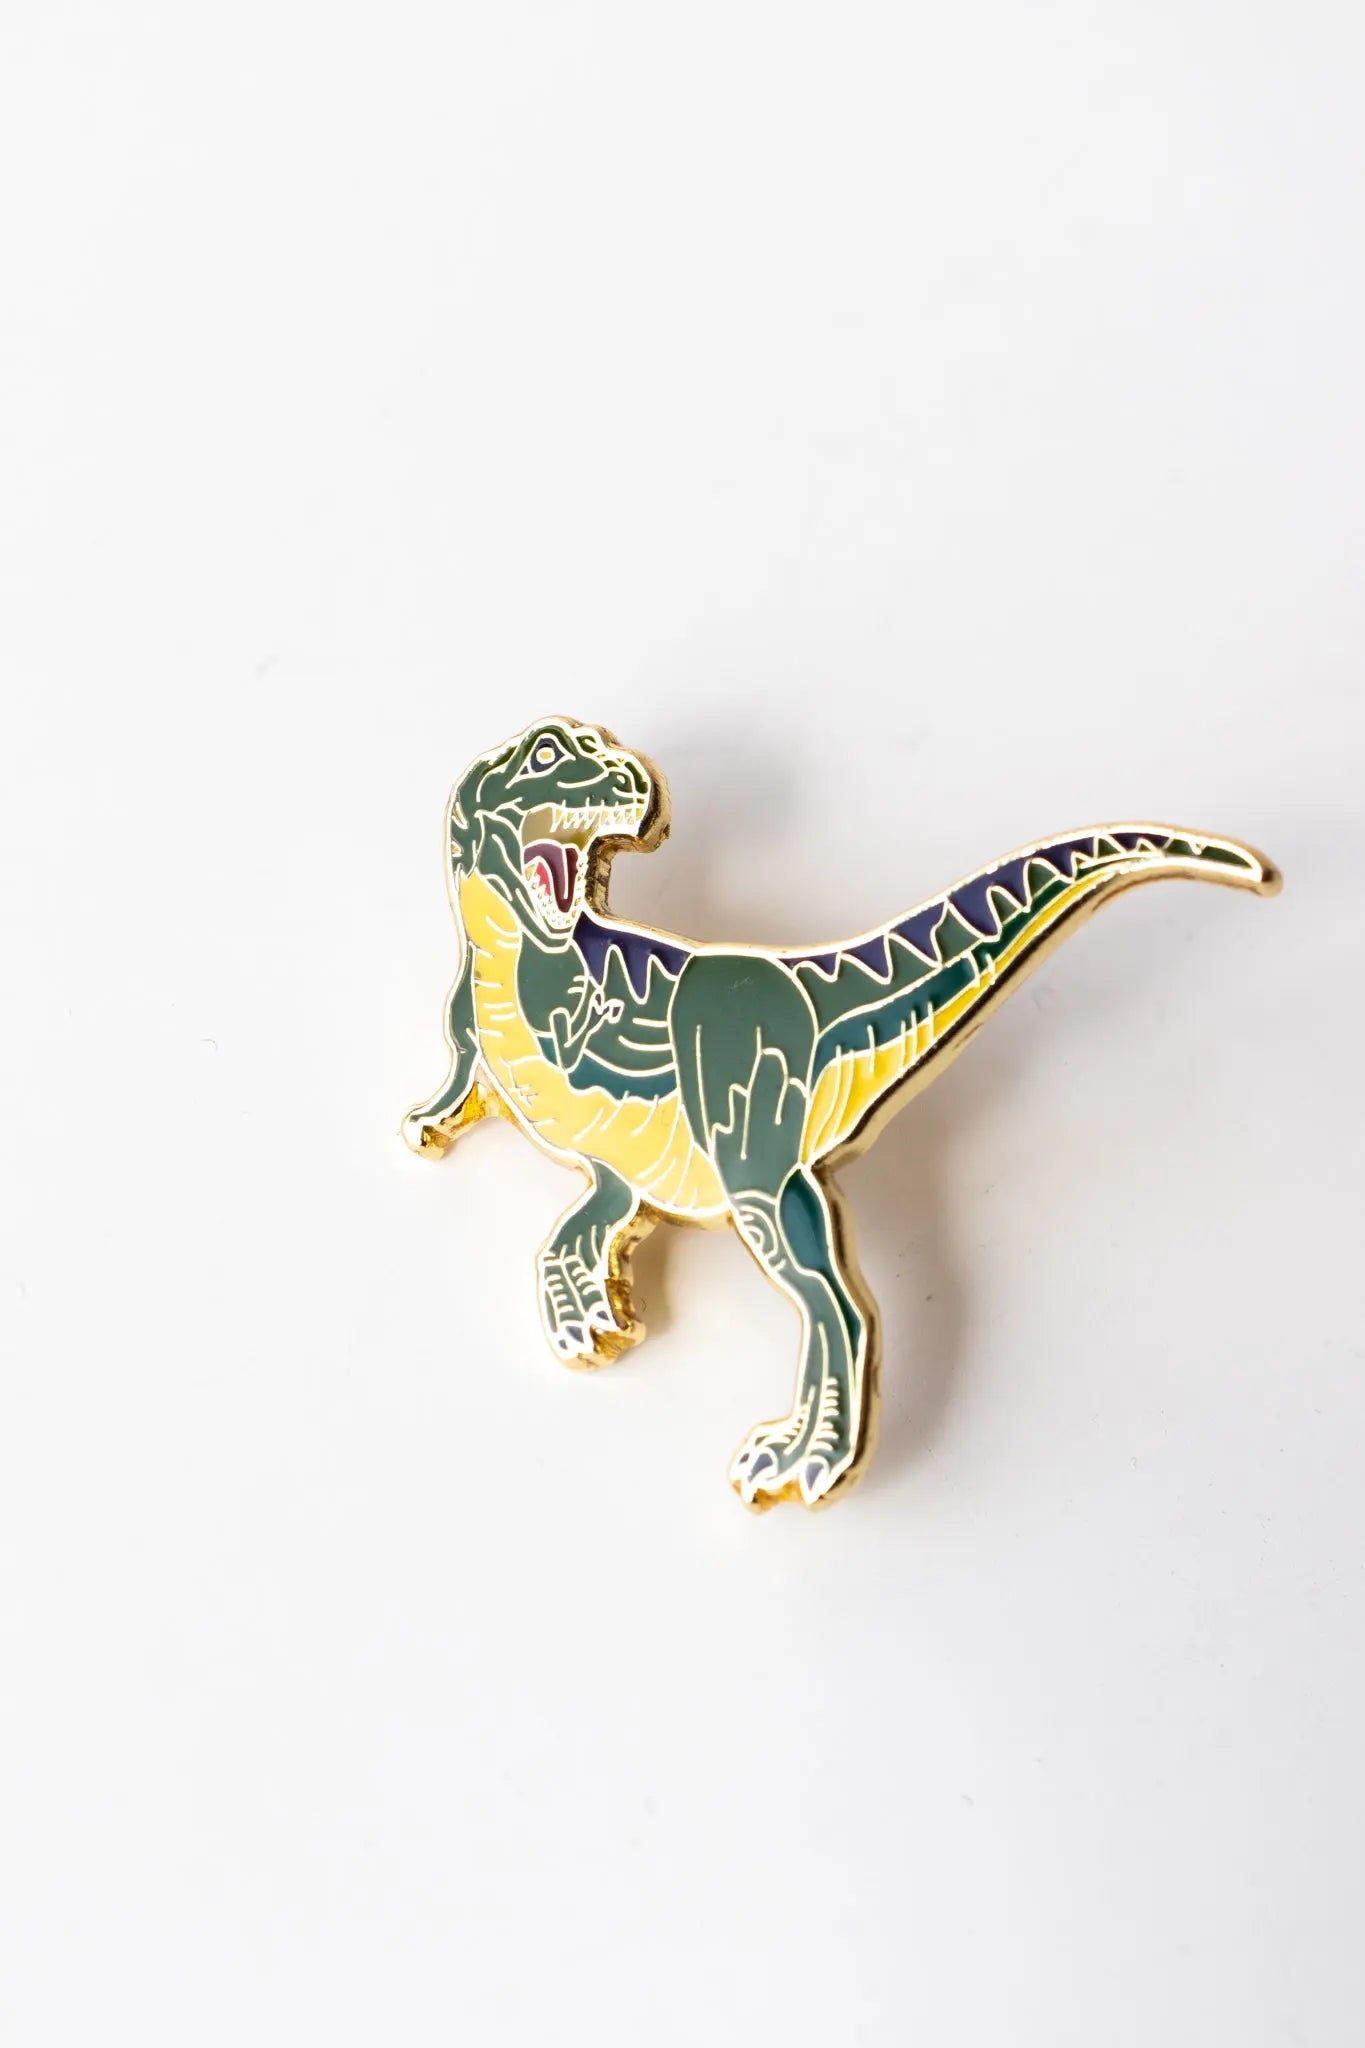 Tyrannosaurus Rex Pin without Feathers